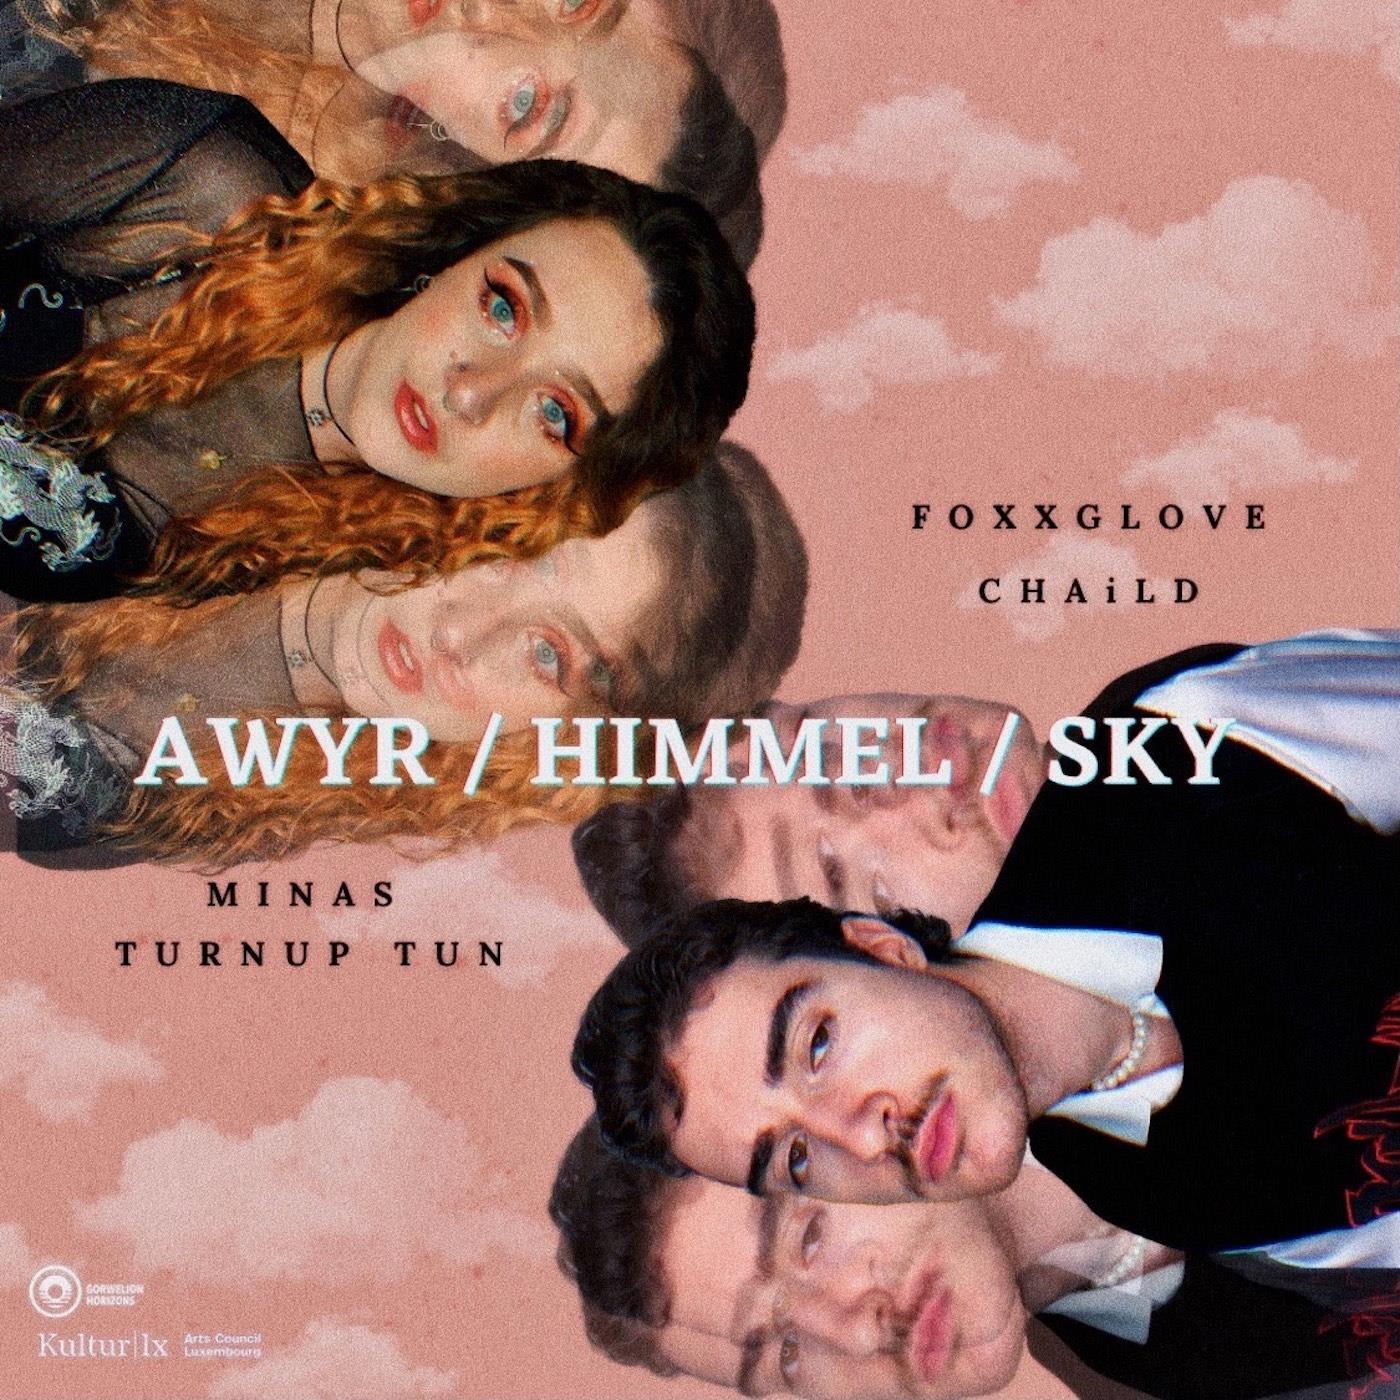 Foxxglove - Awyr / Himmel / Sky (feat. Chaild & Turnup Tun)